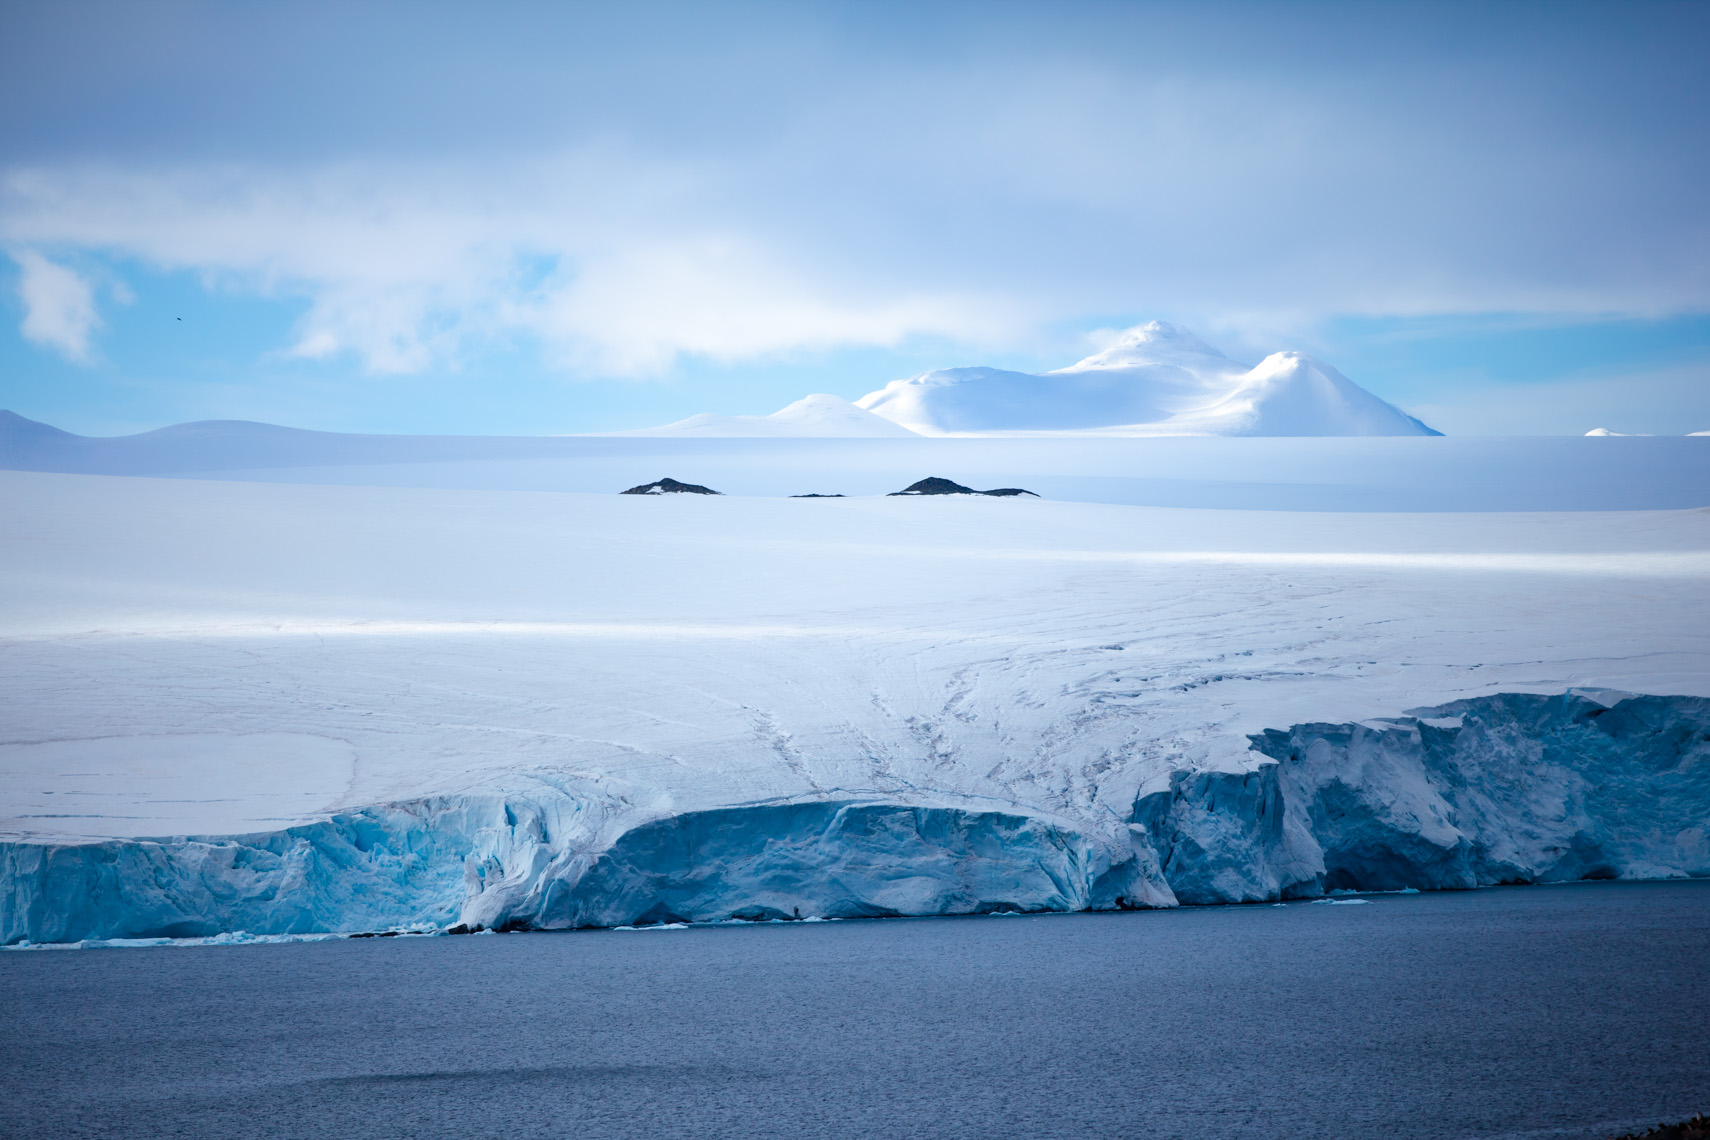 Антарктические широты. Покровные ледники Антарктиды. Антарктида (материк). Северный полюс Арктика и Антарктика. Северный полюс, Арктика и Южный полюс, Антарктида.